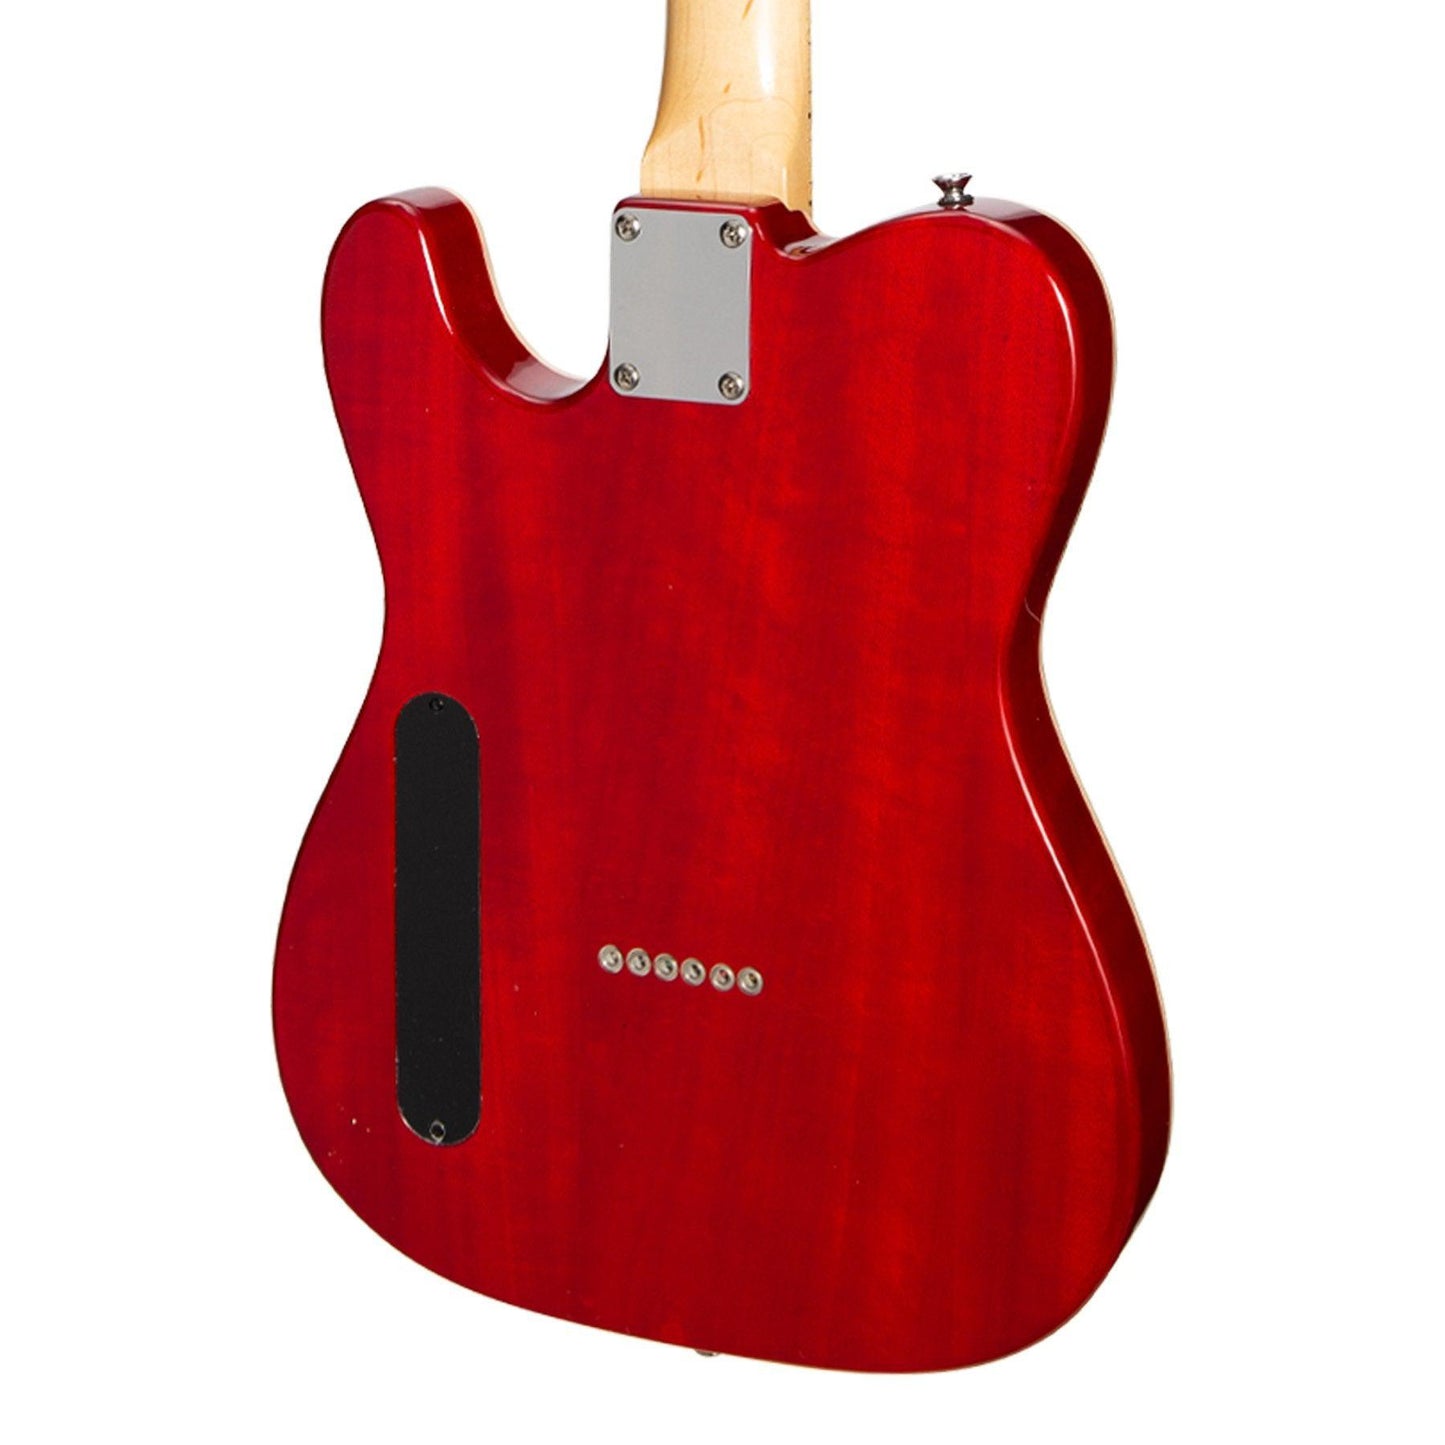 J&D Luthiers Flame Maple Thinline TE-Style Electric Guitar (Cherry Sunburst)